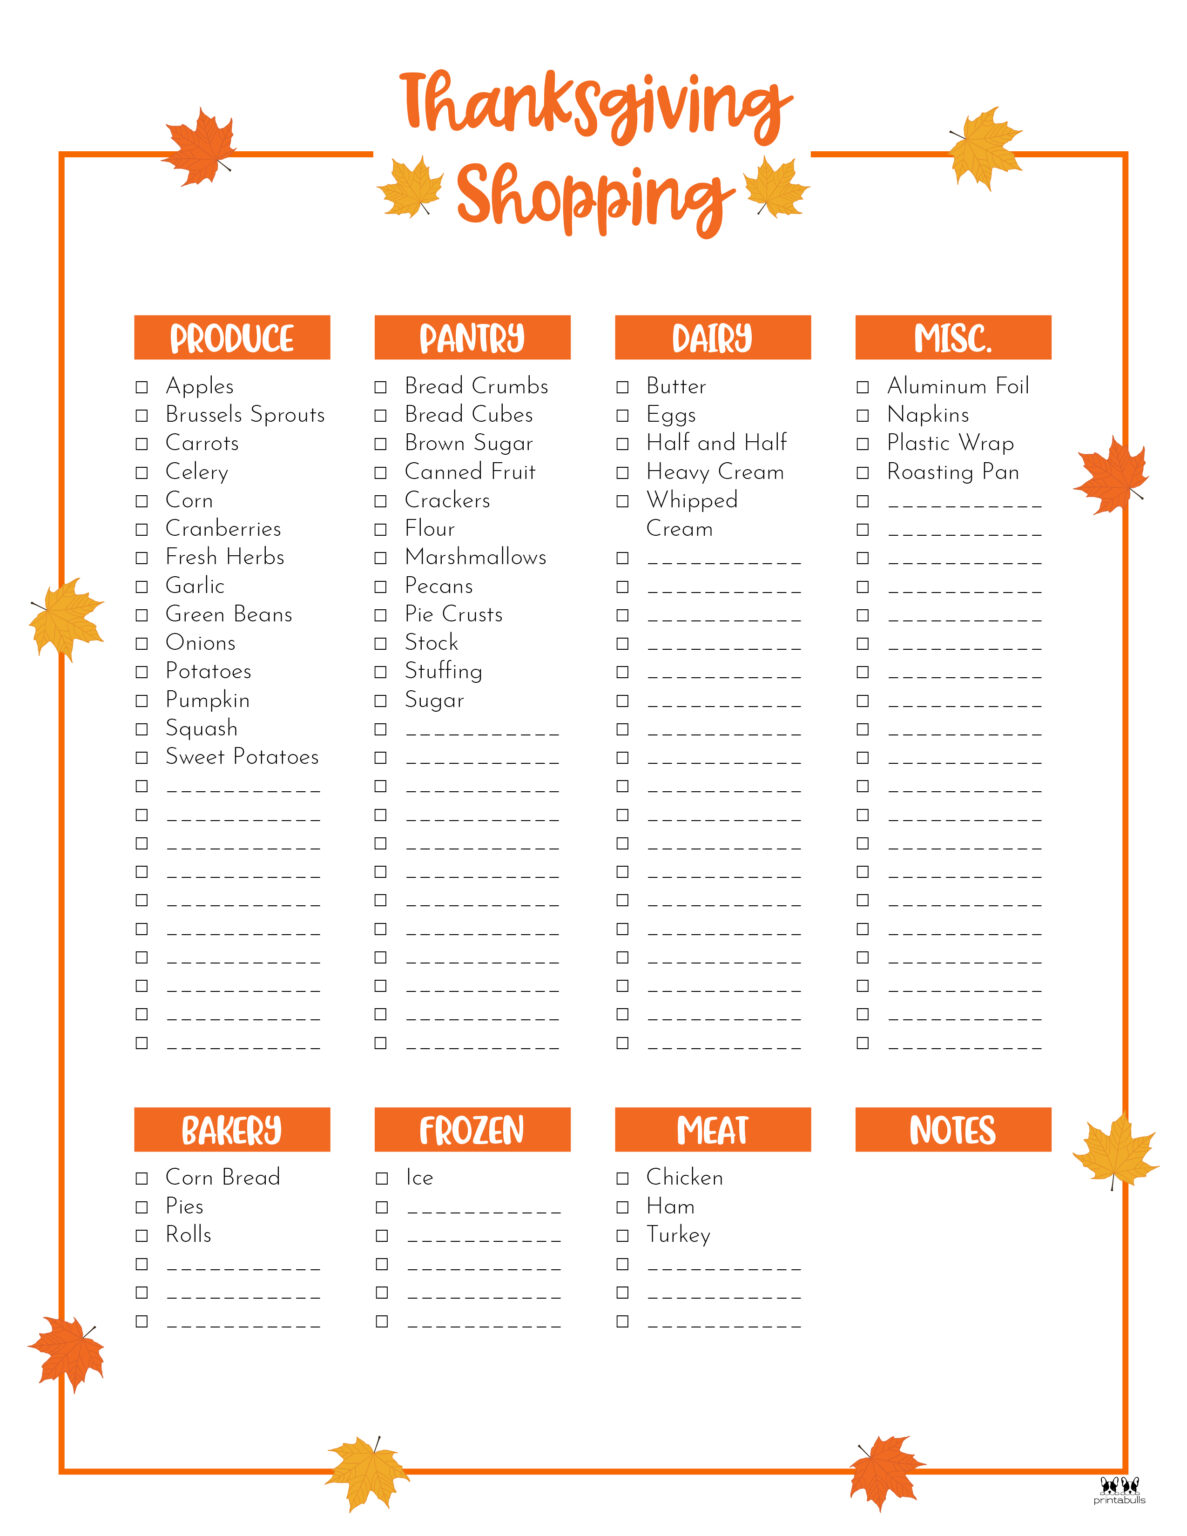 Thanksgiving Shopping Lists & Checklists - 30 FREE Printables | Printabulls